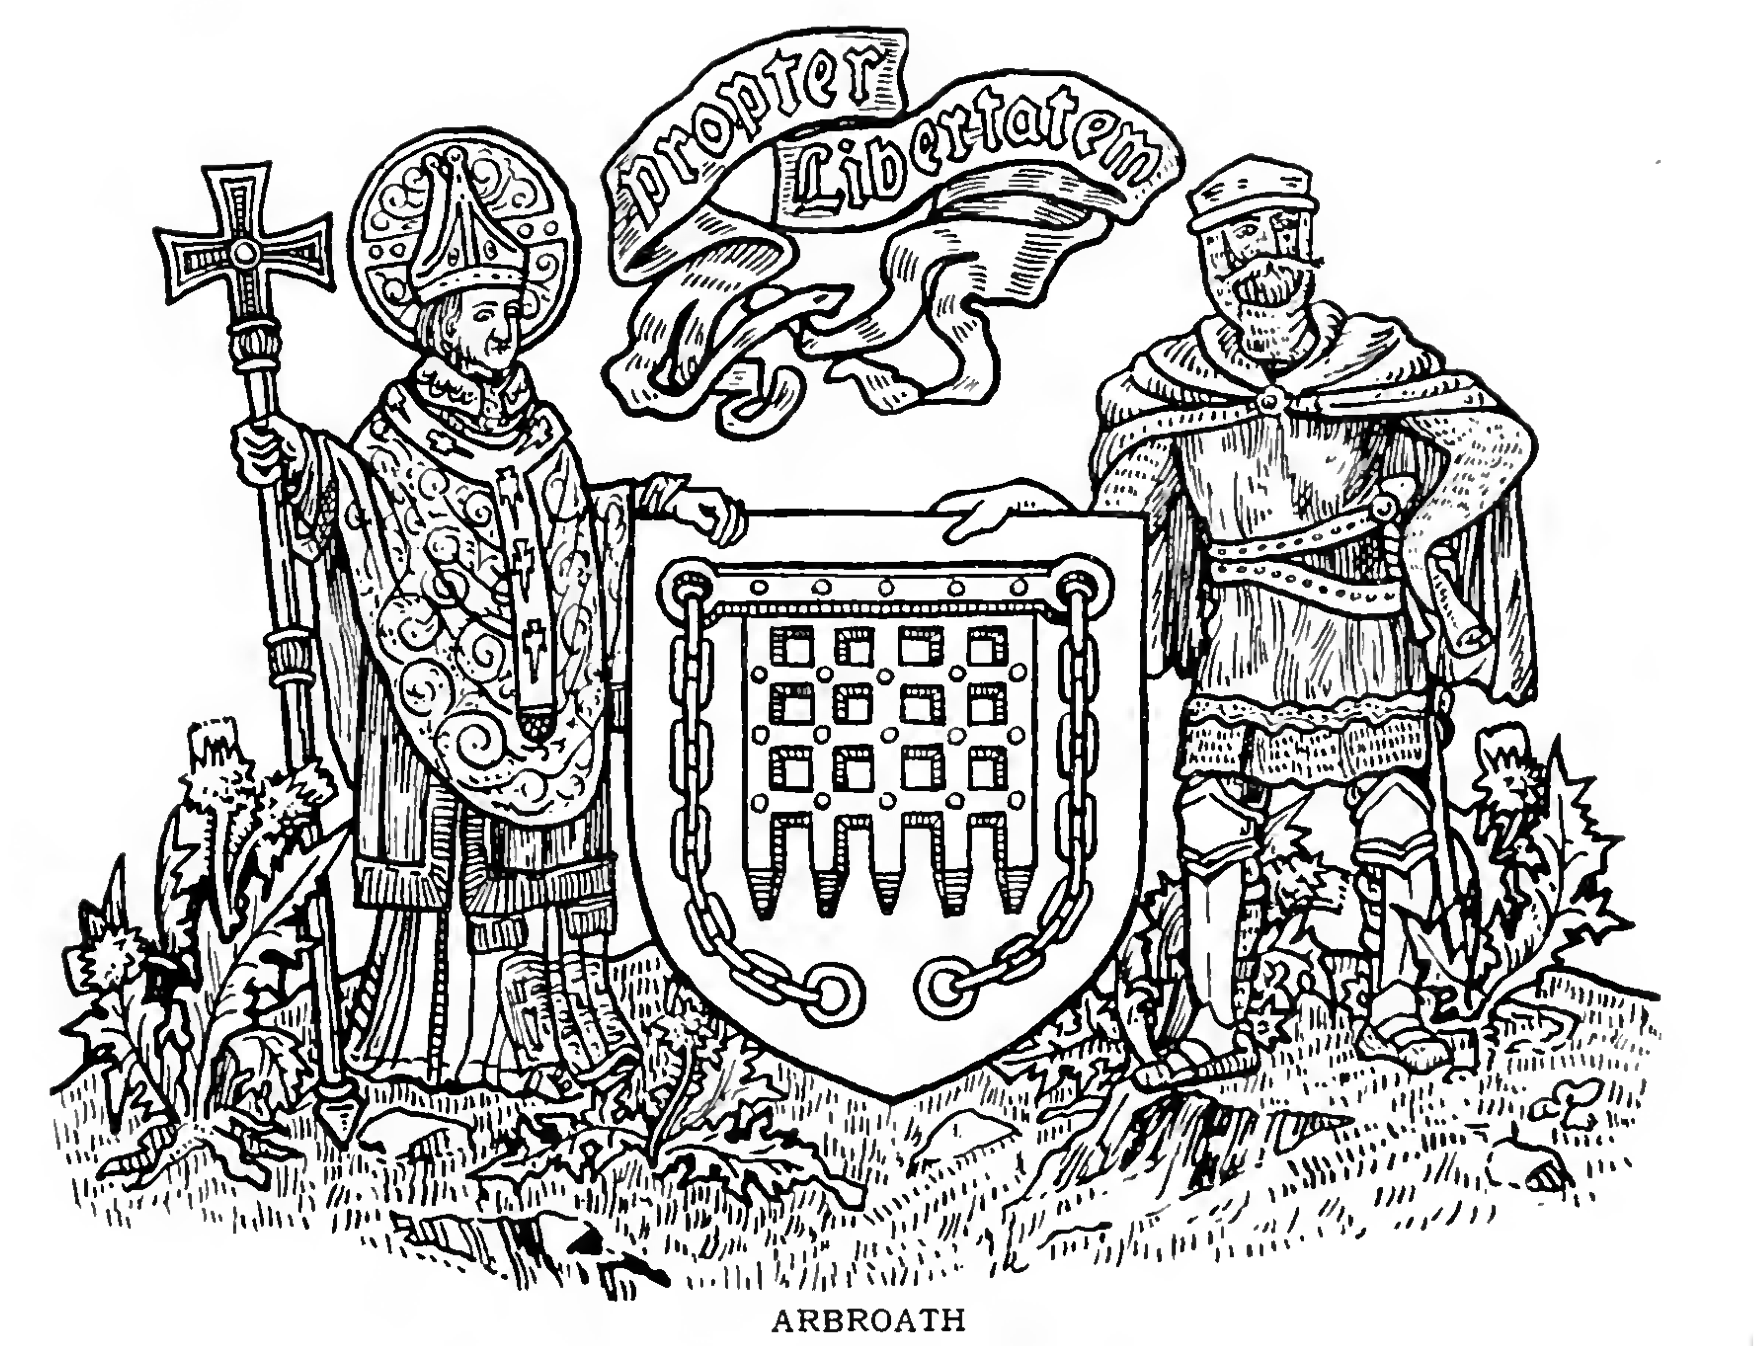 ARBROATH, Royal Burgh of (Forfarshire).